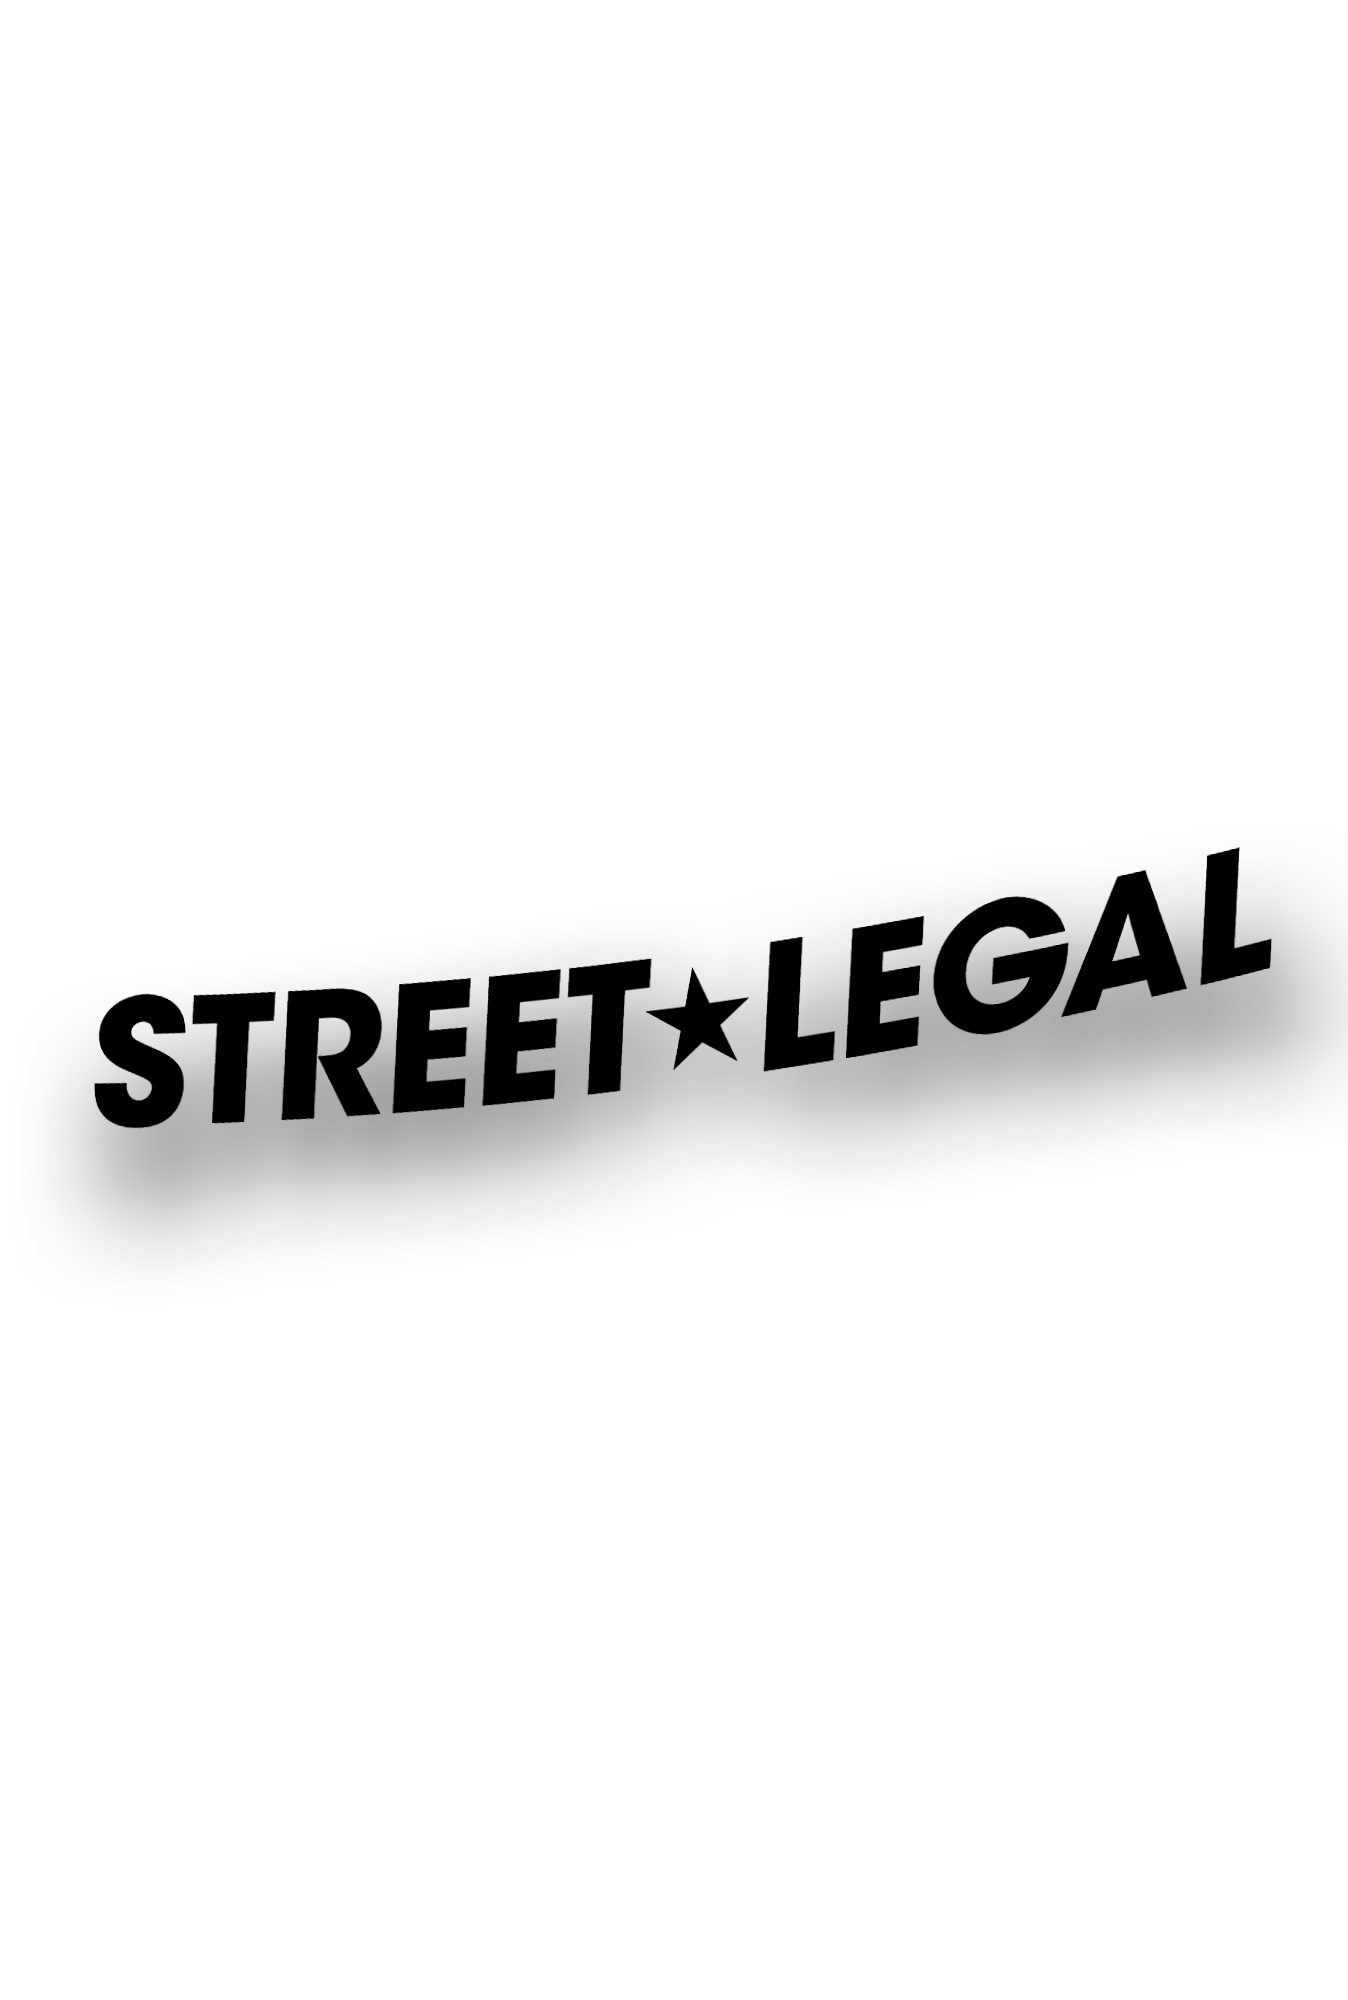 ''Street Legal'' - Plotted Vinyl Sticker